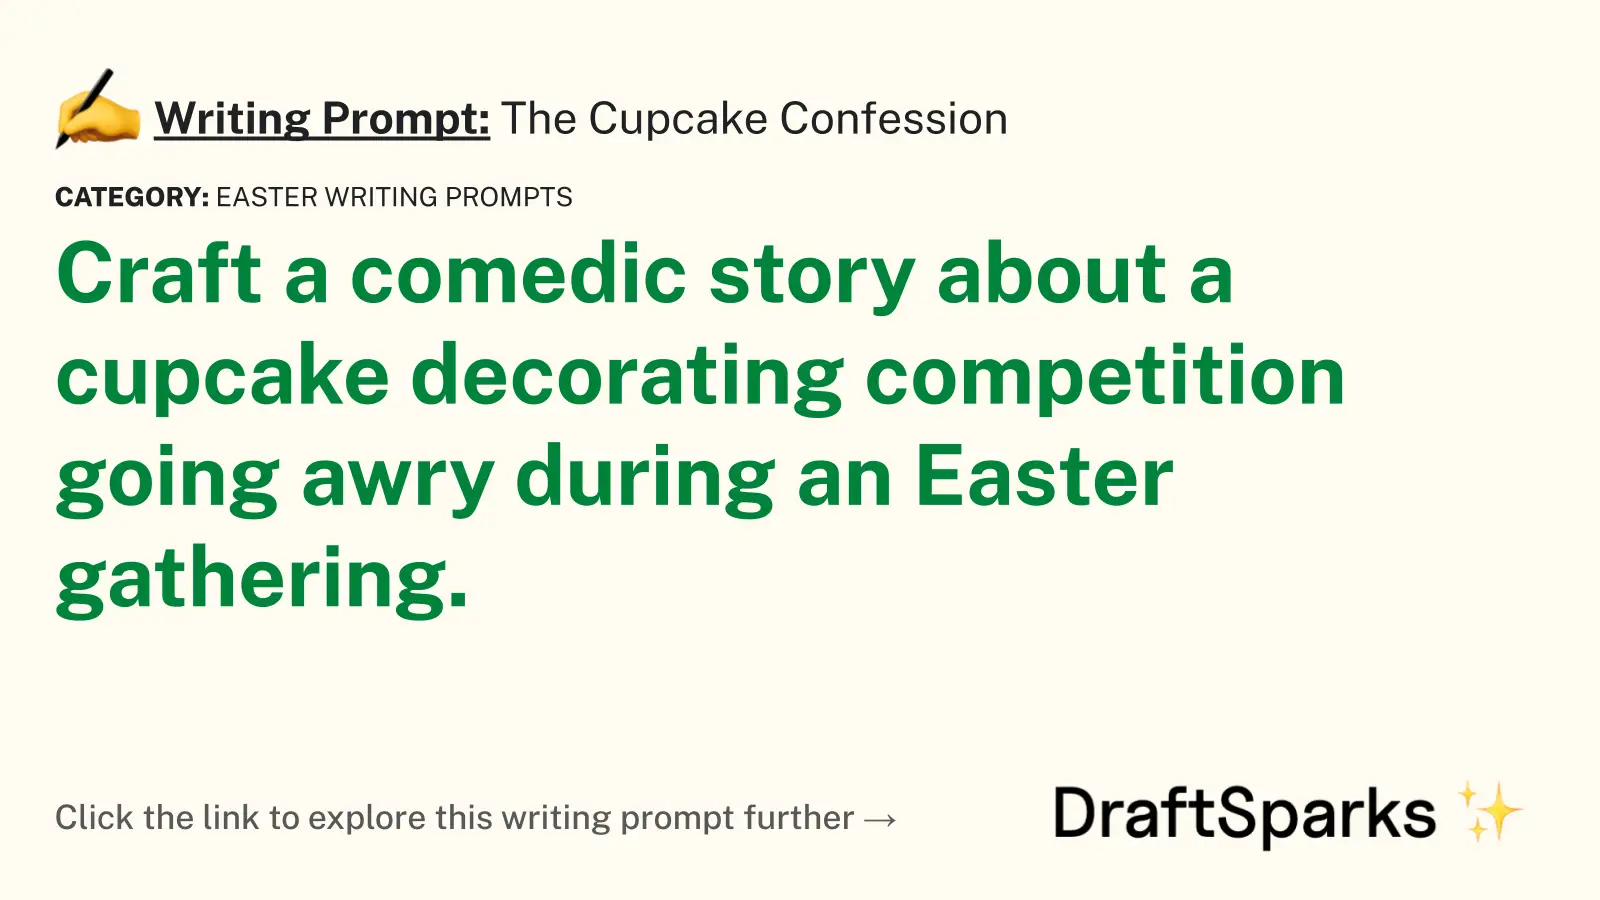 The Cupcake Confession